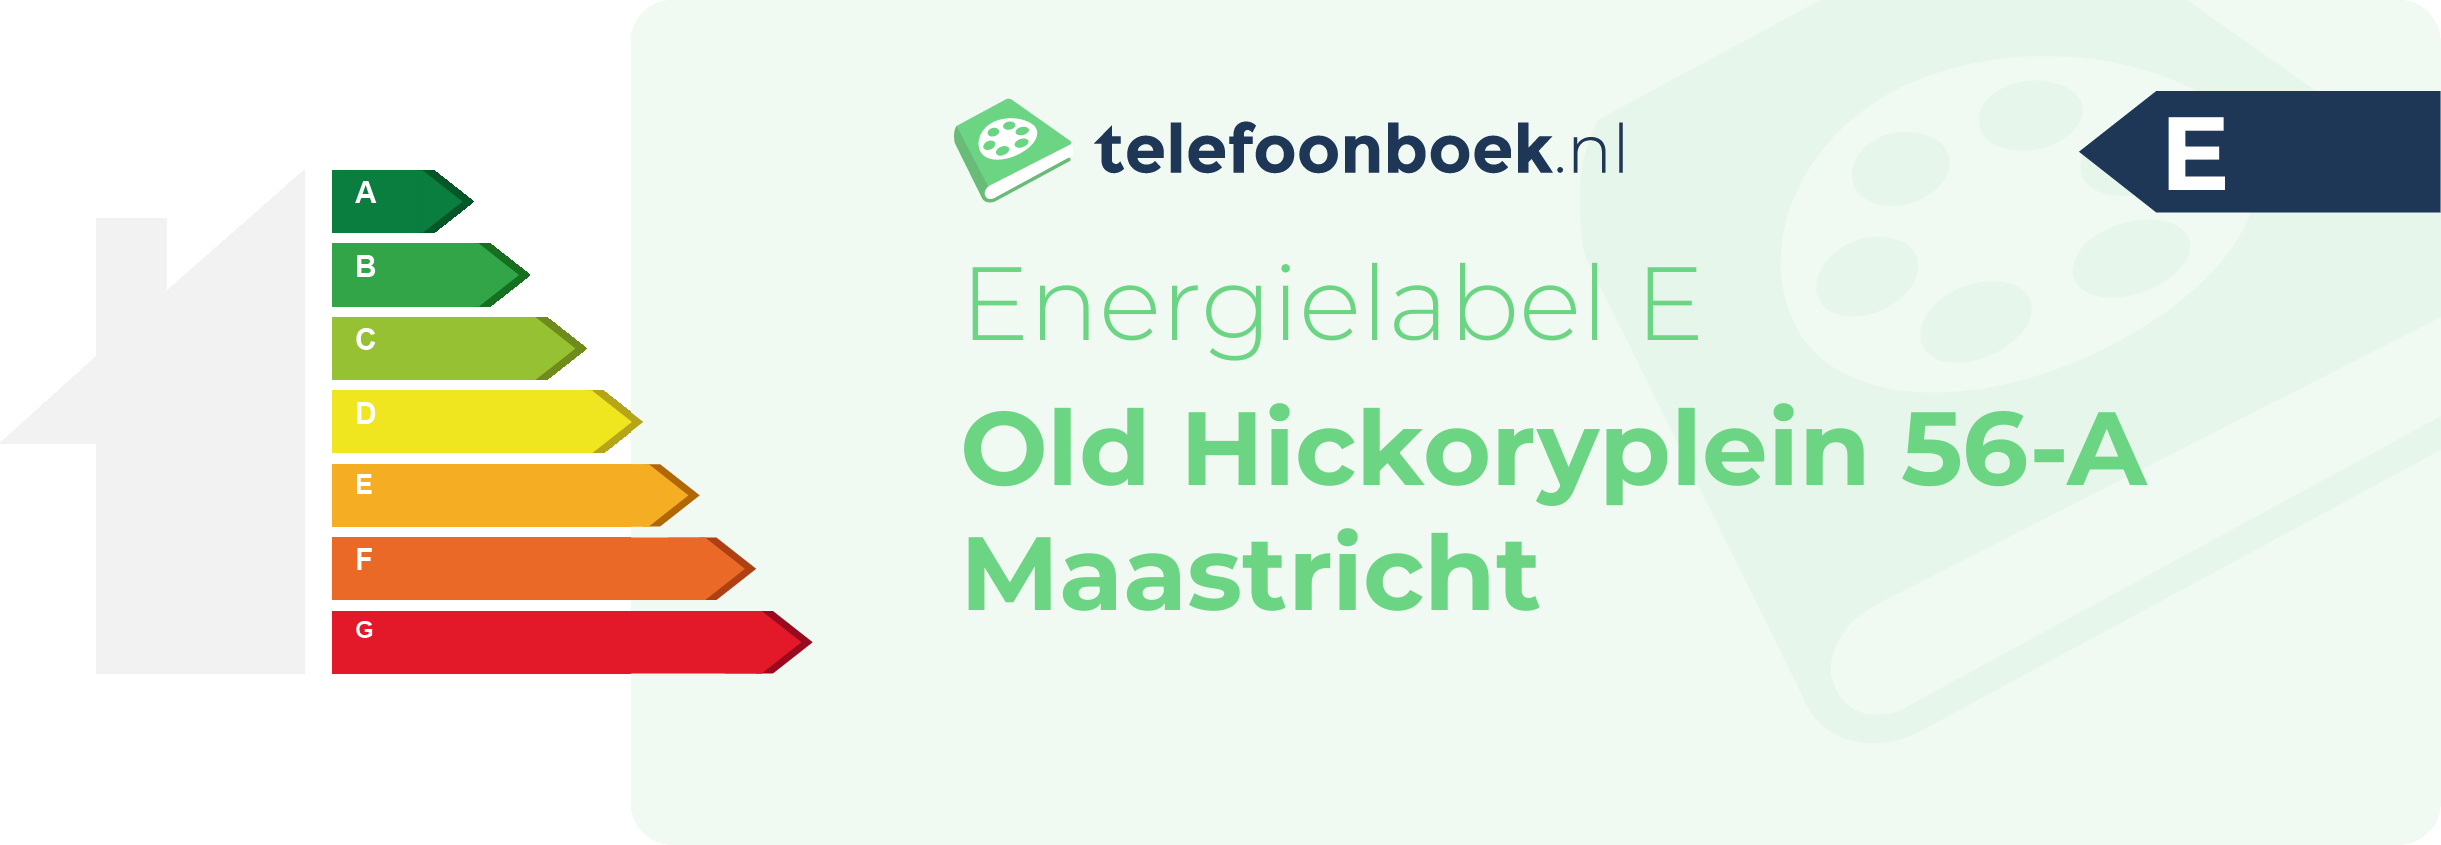 Energielabel Old Hickoryplein 56-A Maastricht